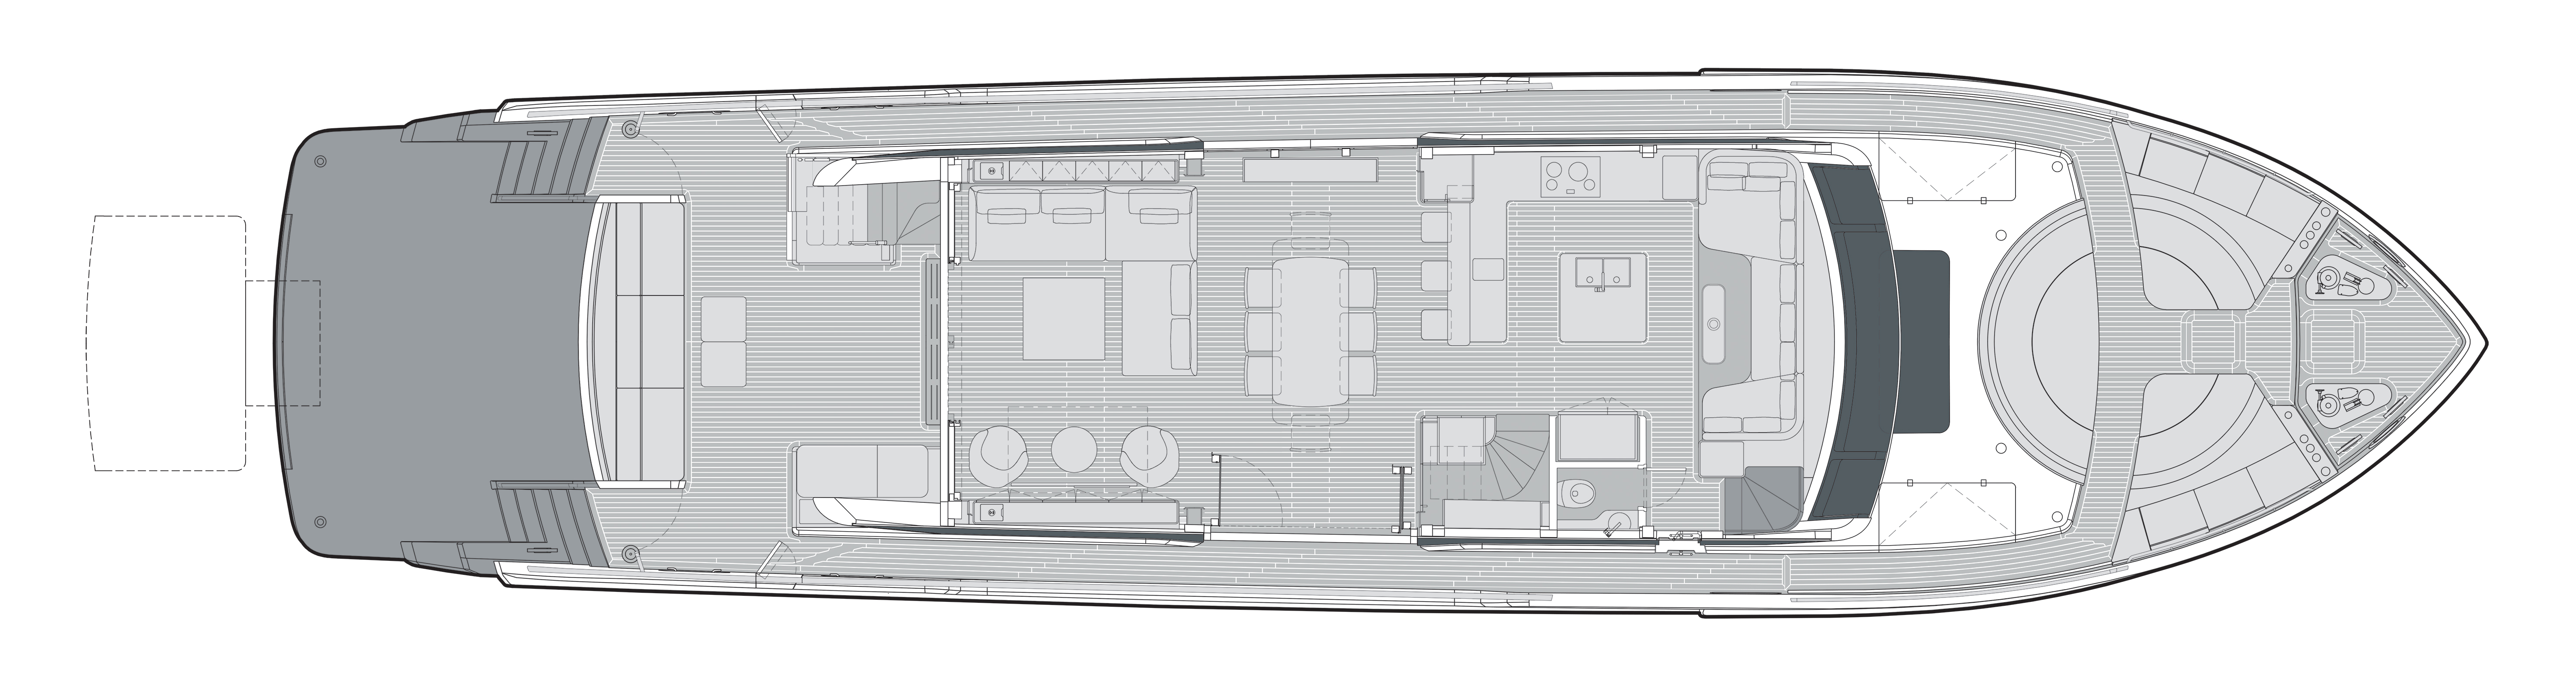 CL Yachts CLX96 main deck, floor plan